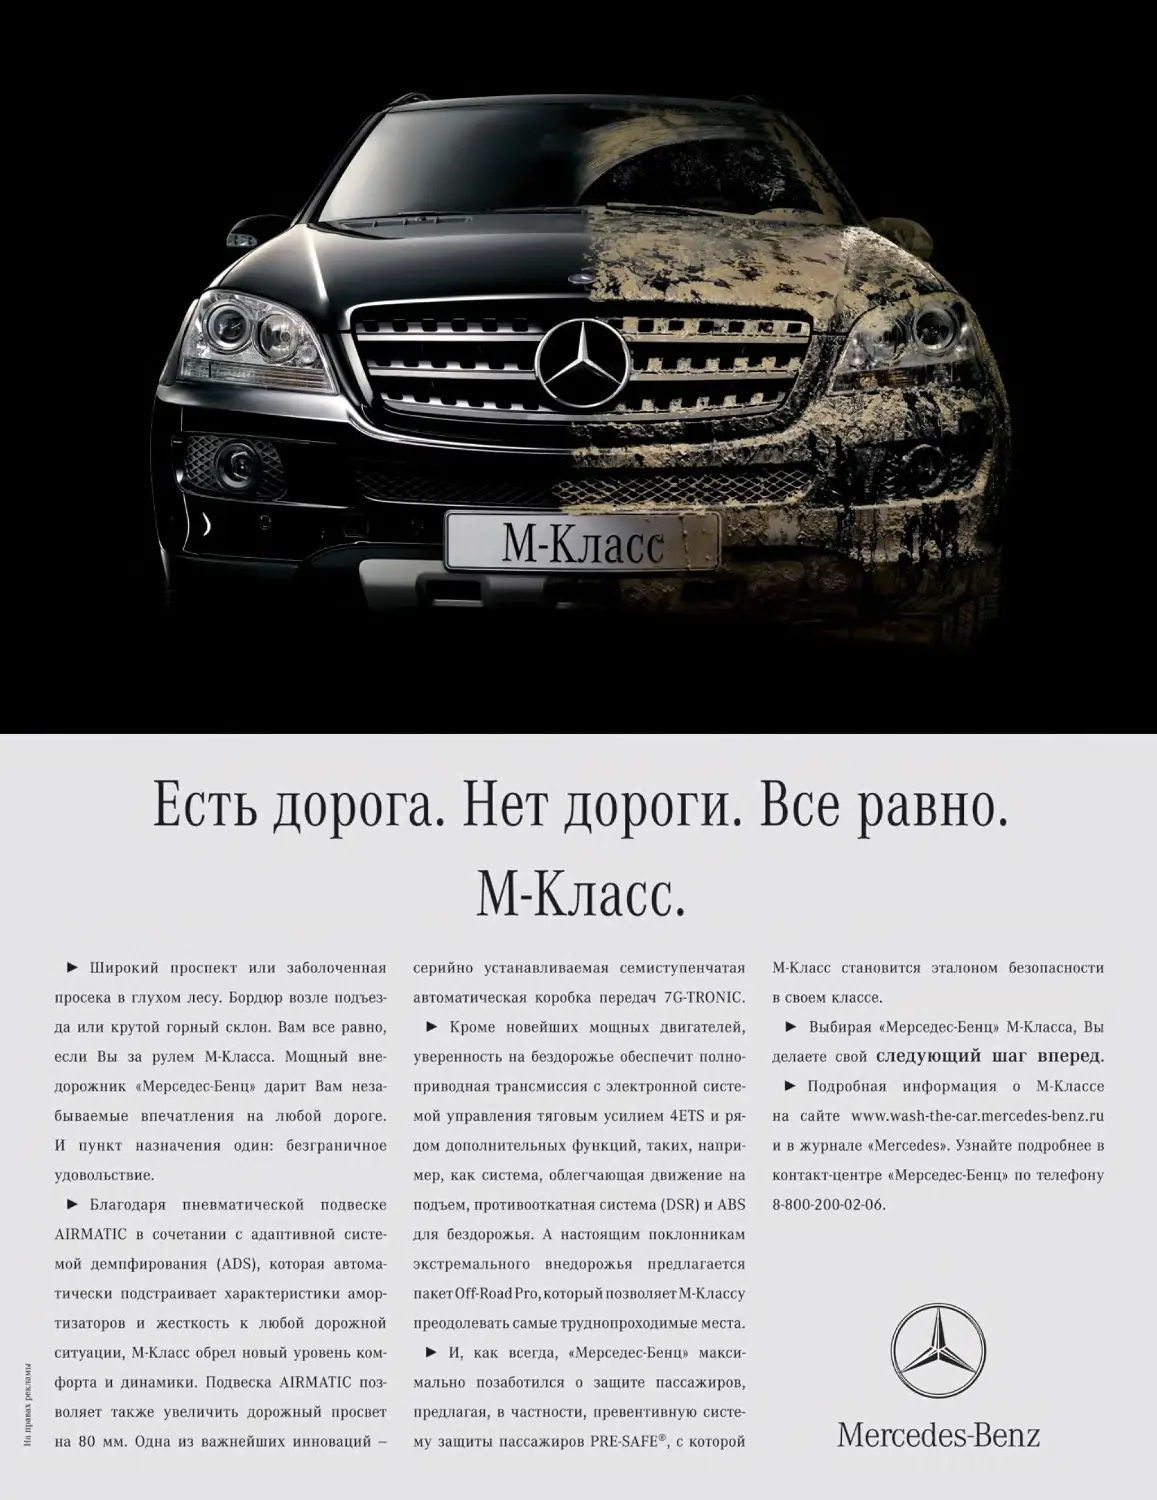 Mercedes текст. Текс рекламы автомобиля. Реклама автомобиля текст. Реклама автомобиля пример. Текстовая реклама на машине.